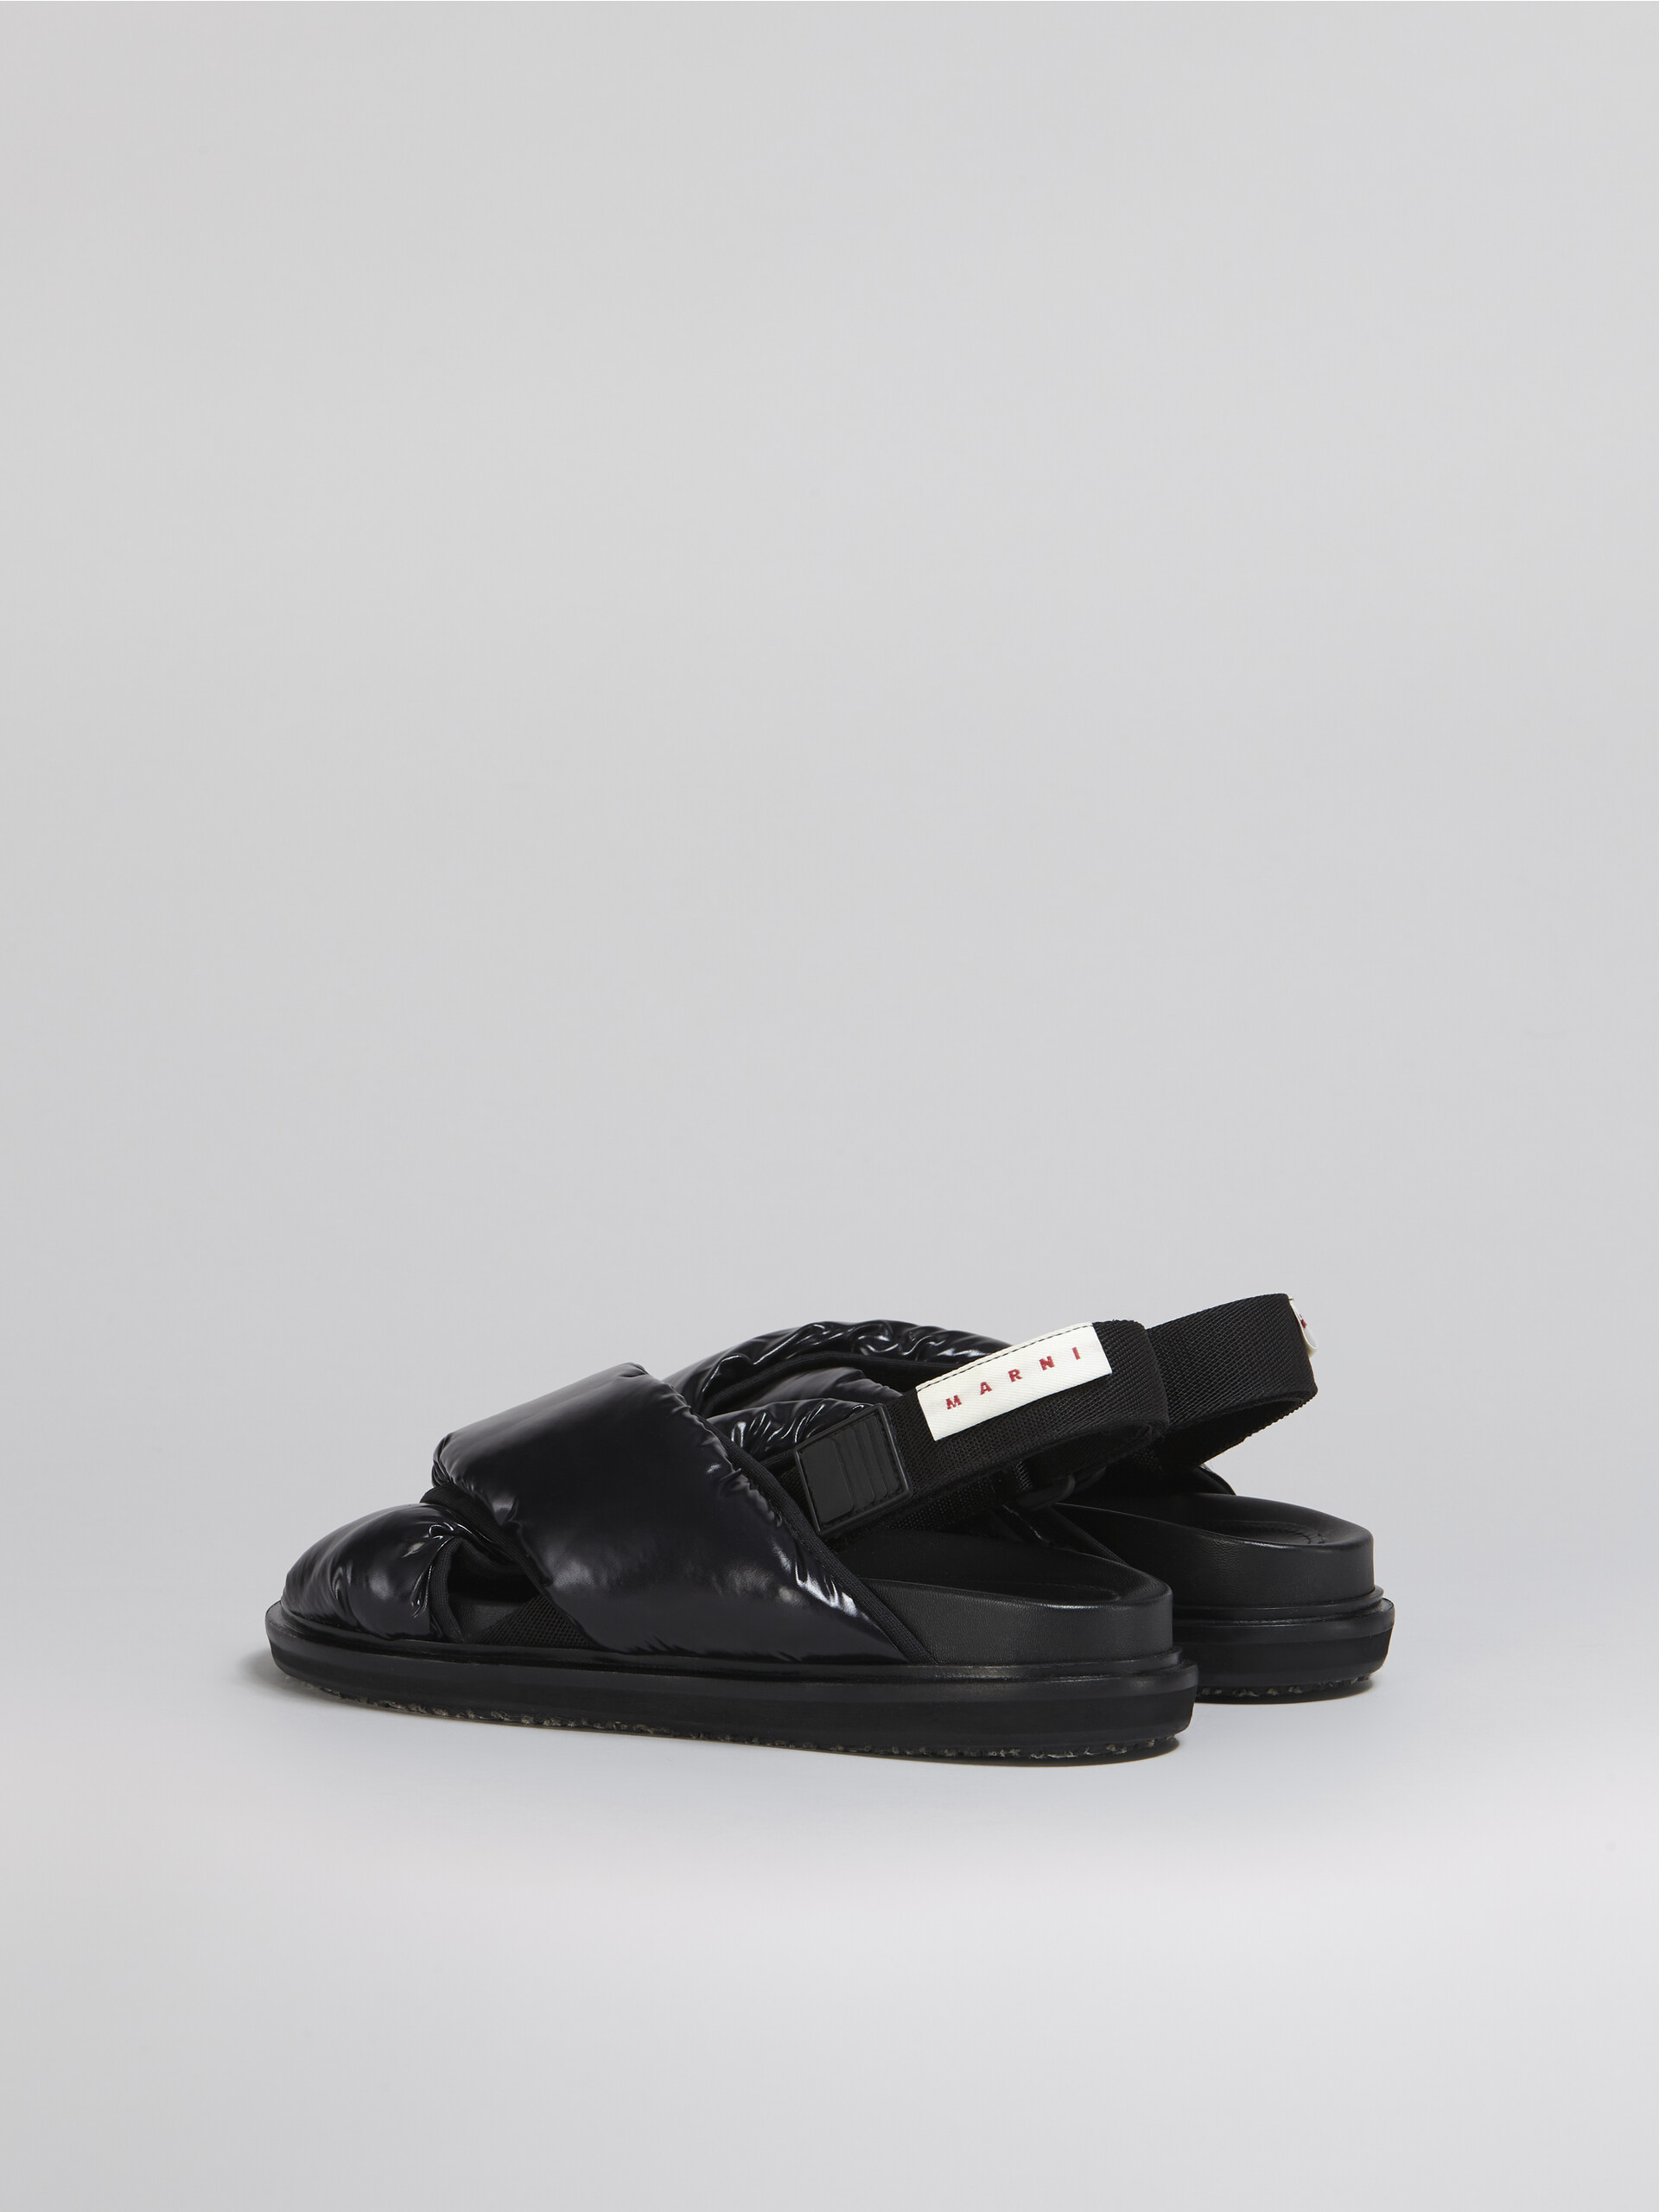 Black nylon criss-cross fussbett - Sandals - Image 3